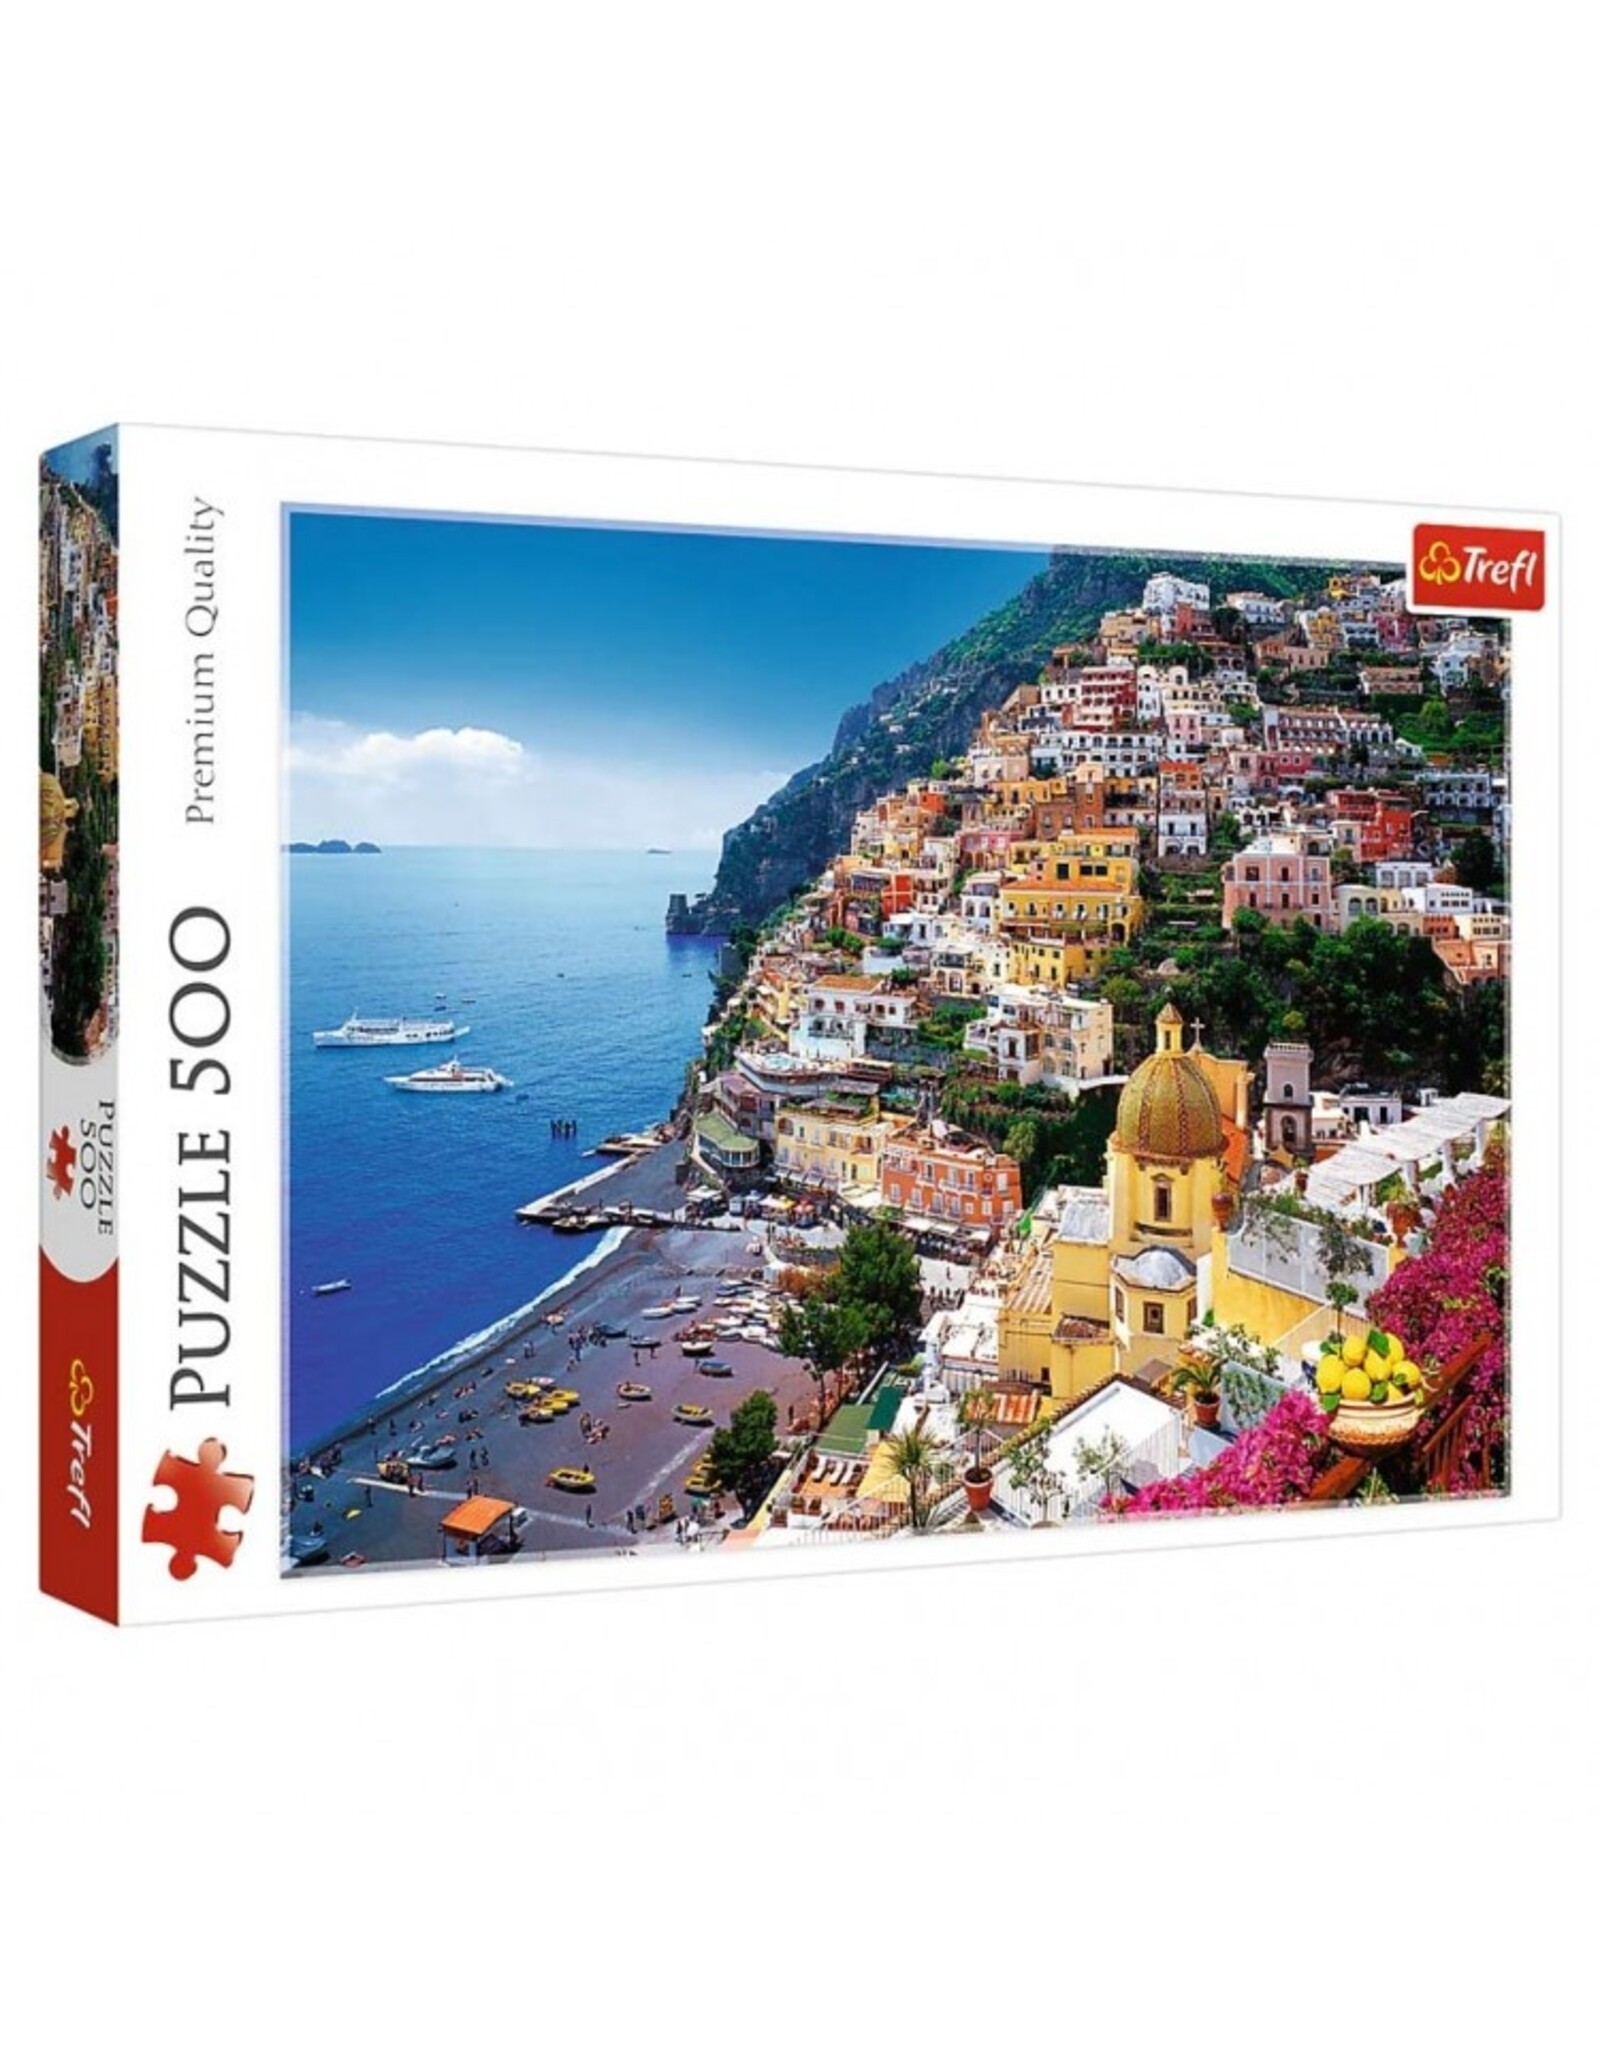 Trefl Puzzle: Positano, Italy/Foroteca 500pc